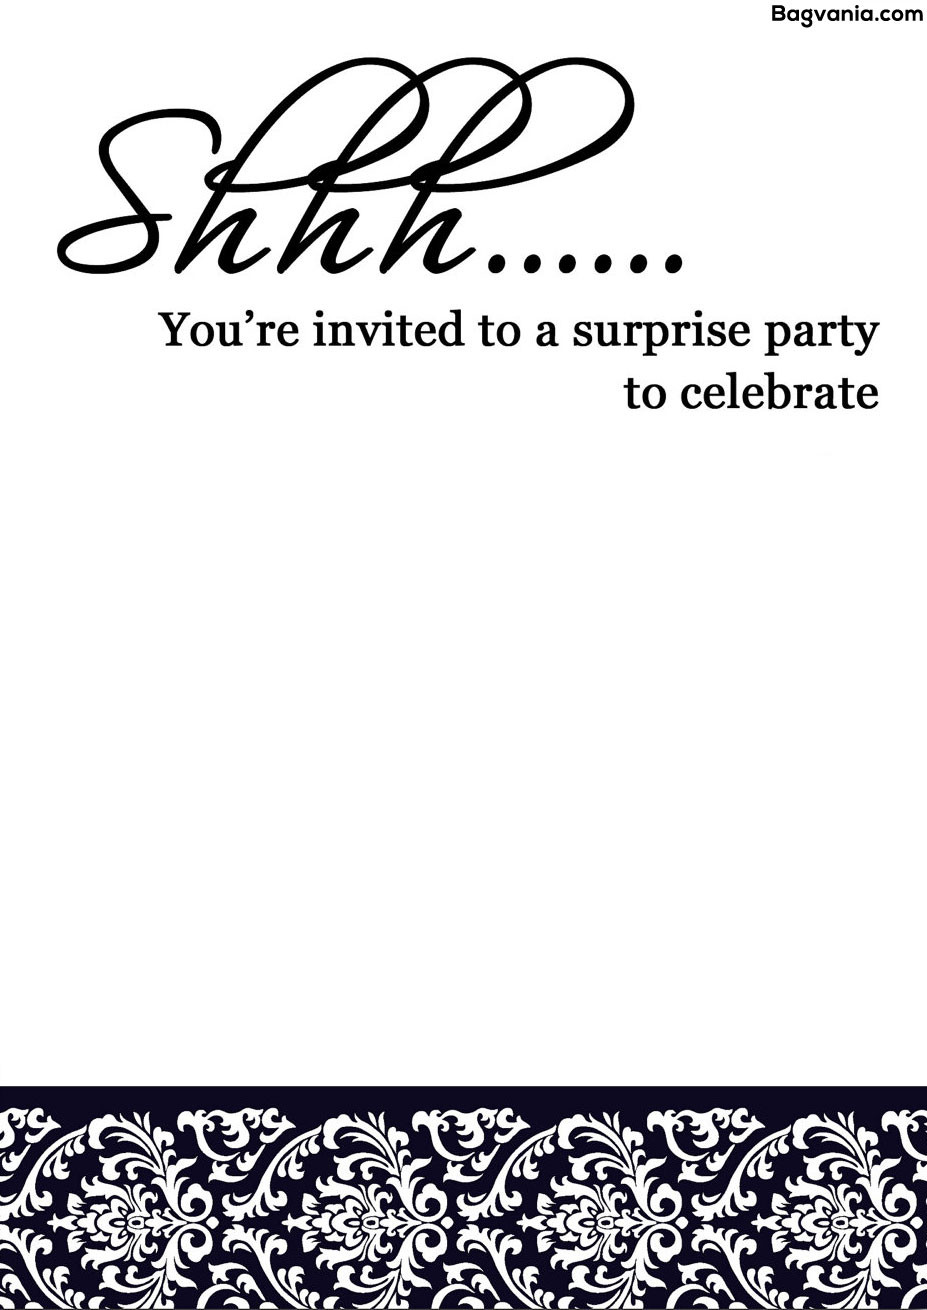 Free Printable Surprise Birthday Invitations
 Free Printable Surprise Birthday Invitations – FREE